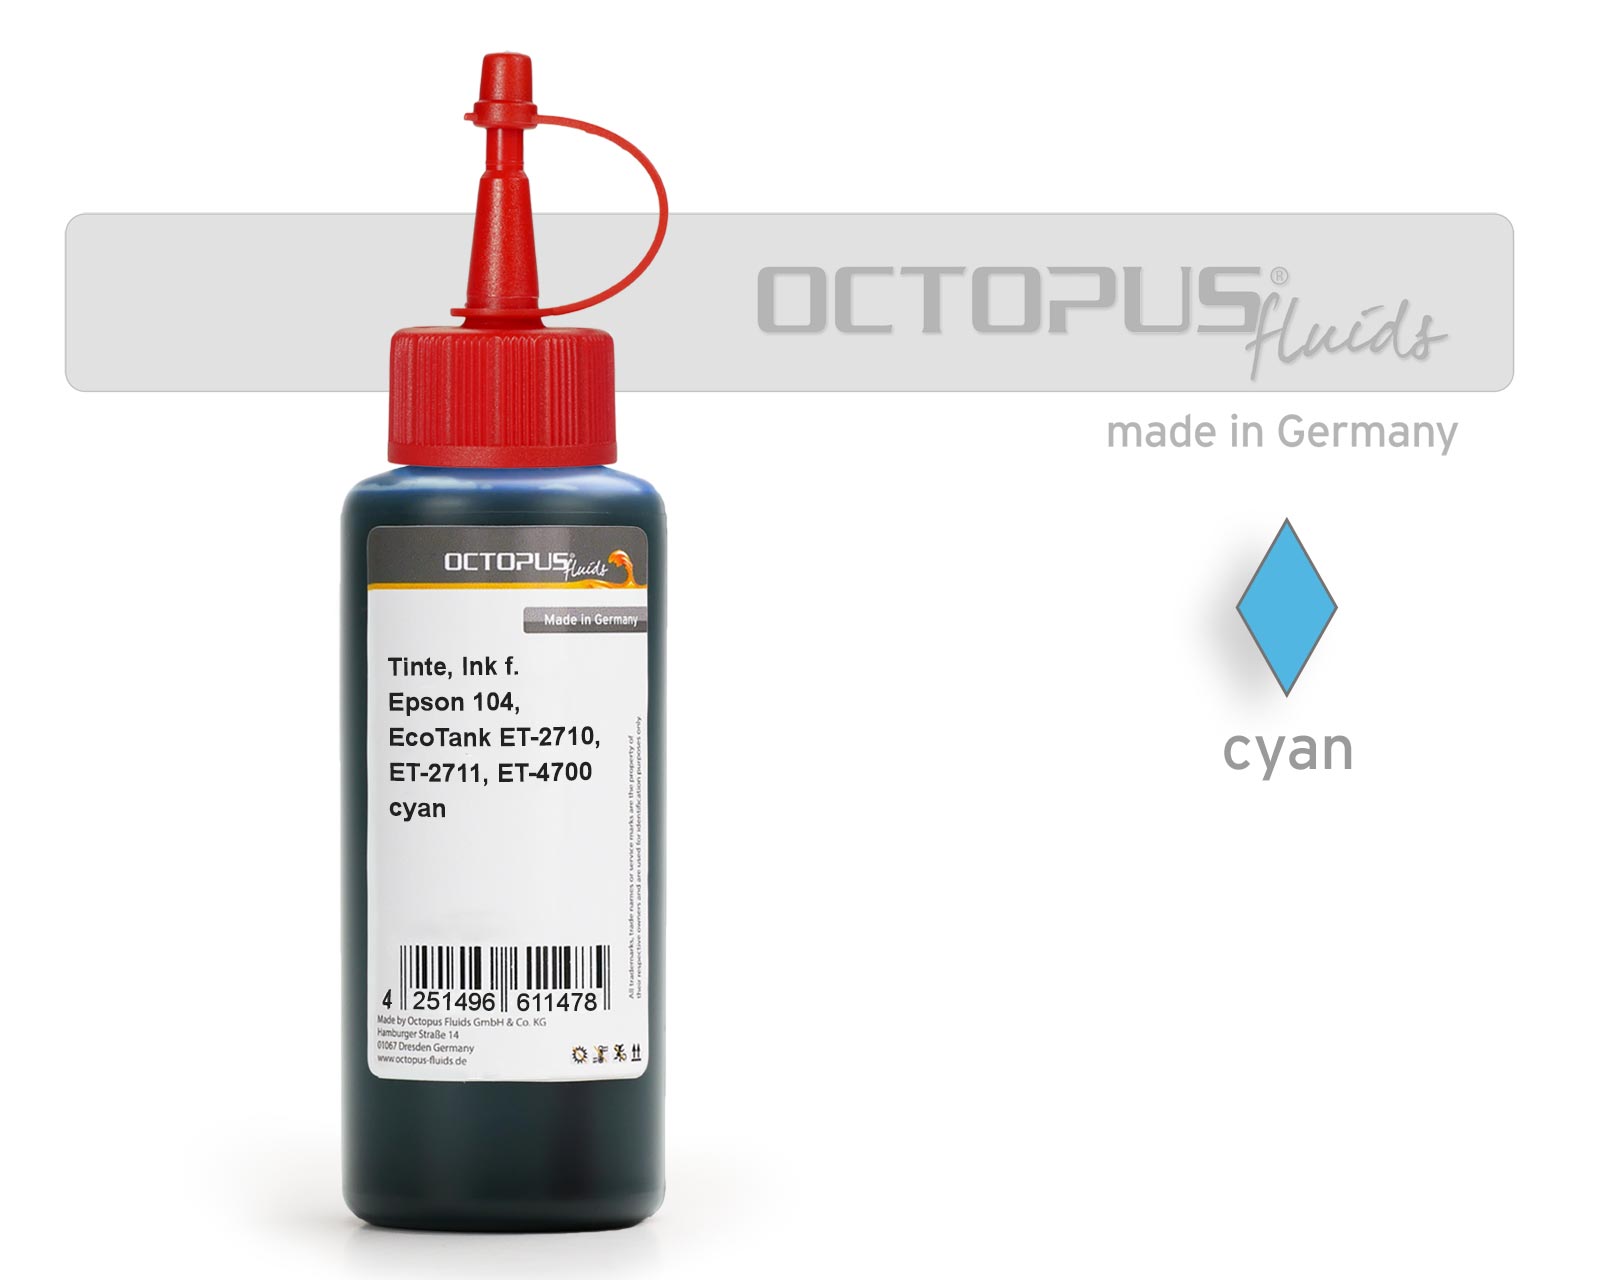 Refill ink for Epson 104, EcoTank ET-2710, ET-2711, ET-4700 cyan